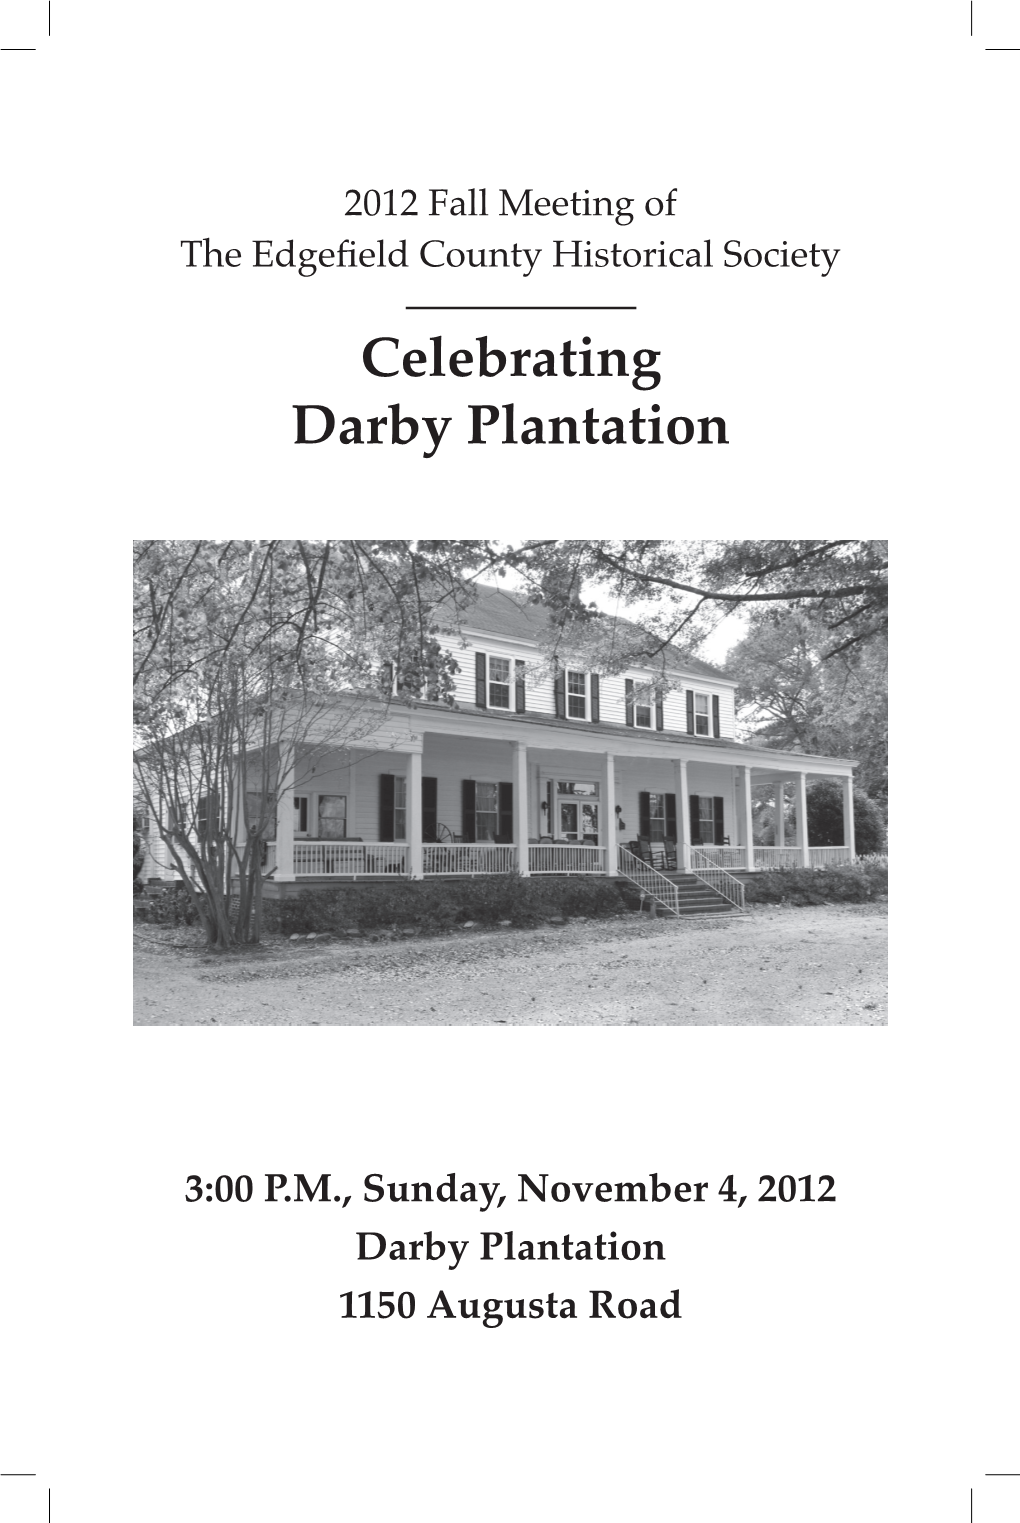 Celebrating Darby Plantation